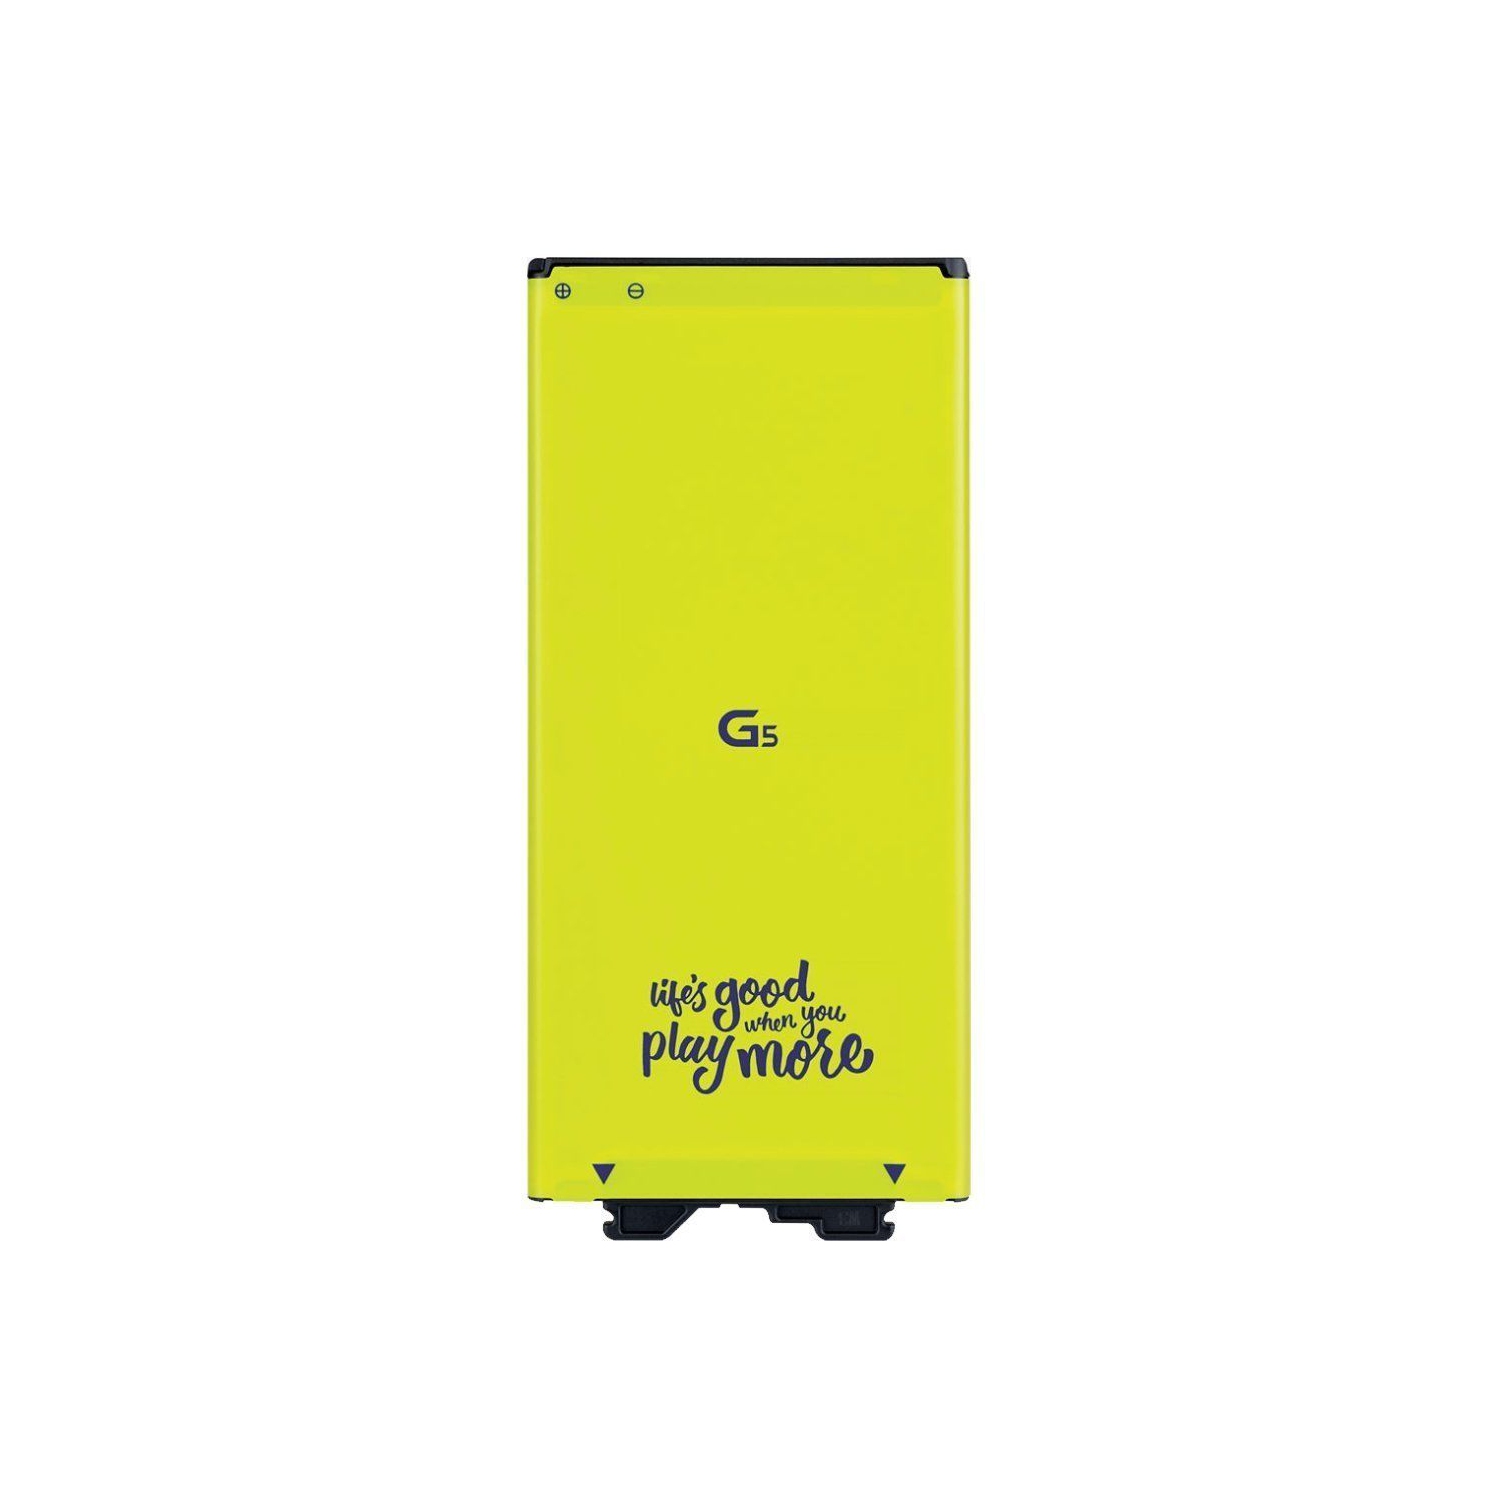 LG G5 Smartphone Cell Phone Battery 3.85V Li-ion 2800mAh 10.8wh BL-42D1F - Yellow